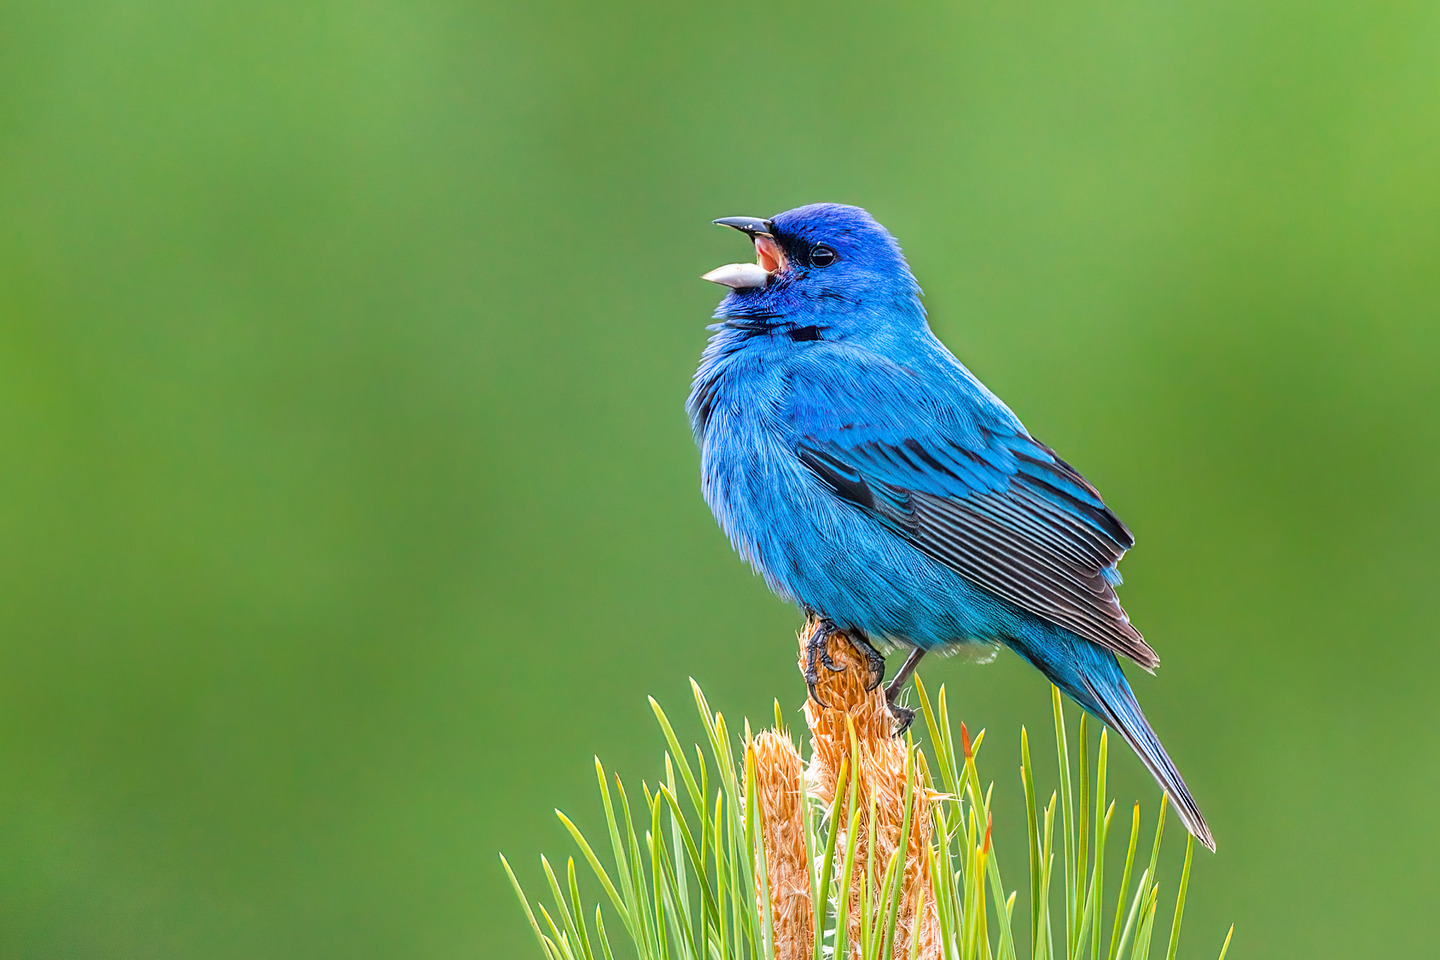 The Twitter bluebird singing.